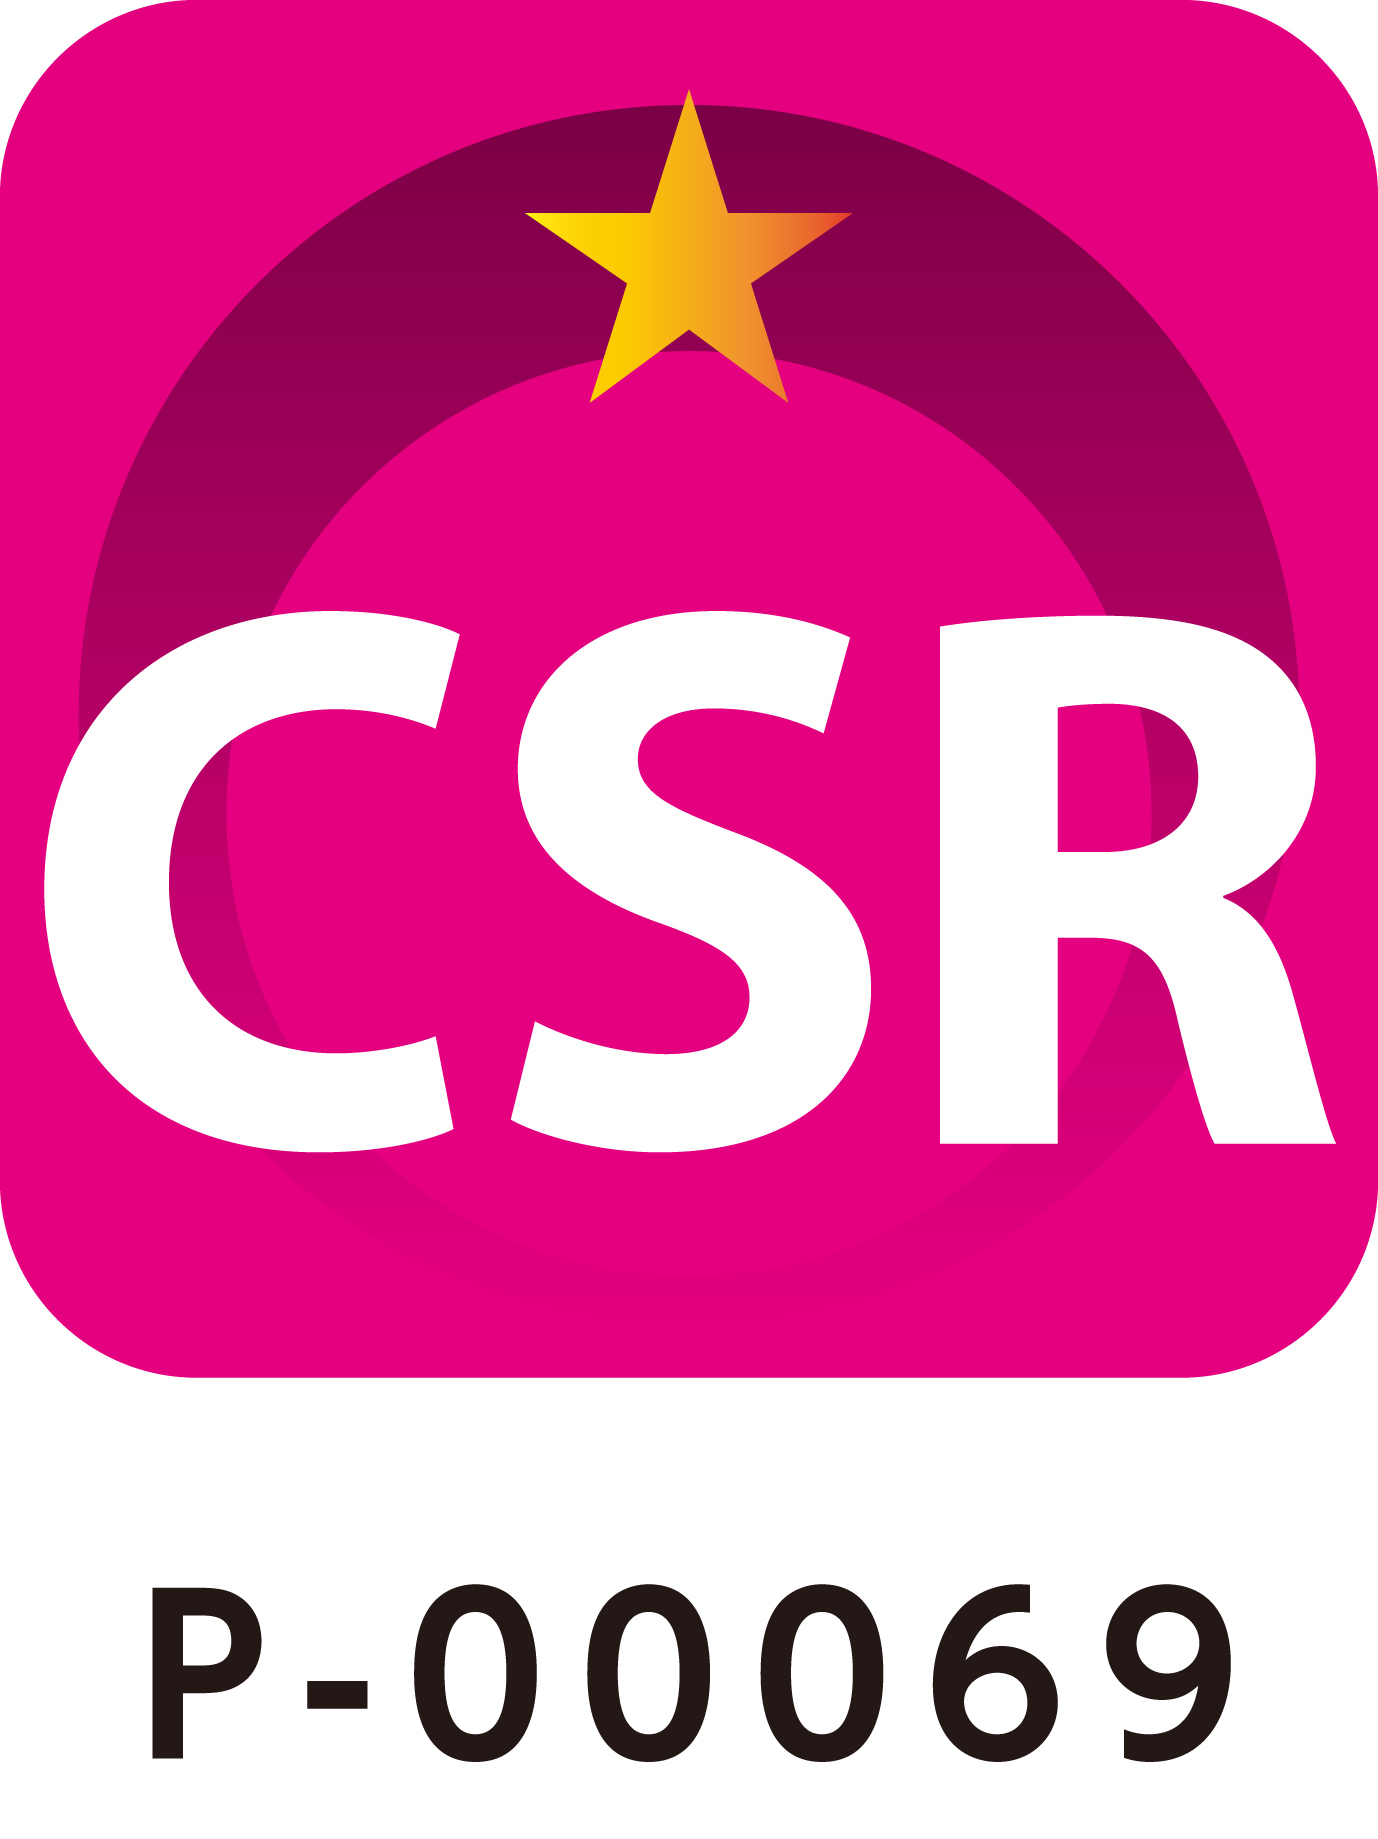 CSR認定制度「ワンスター」マーク